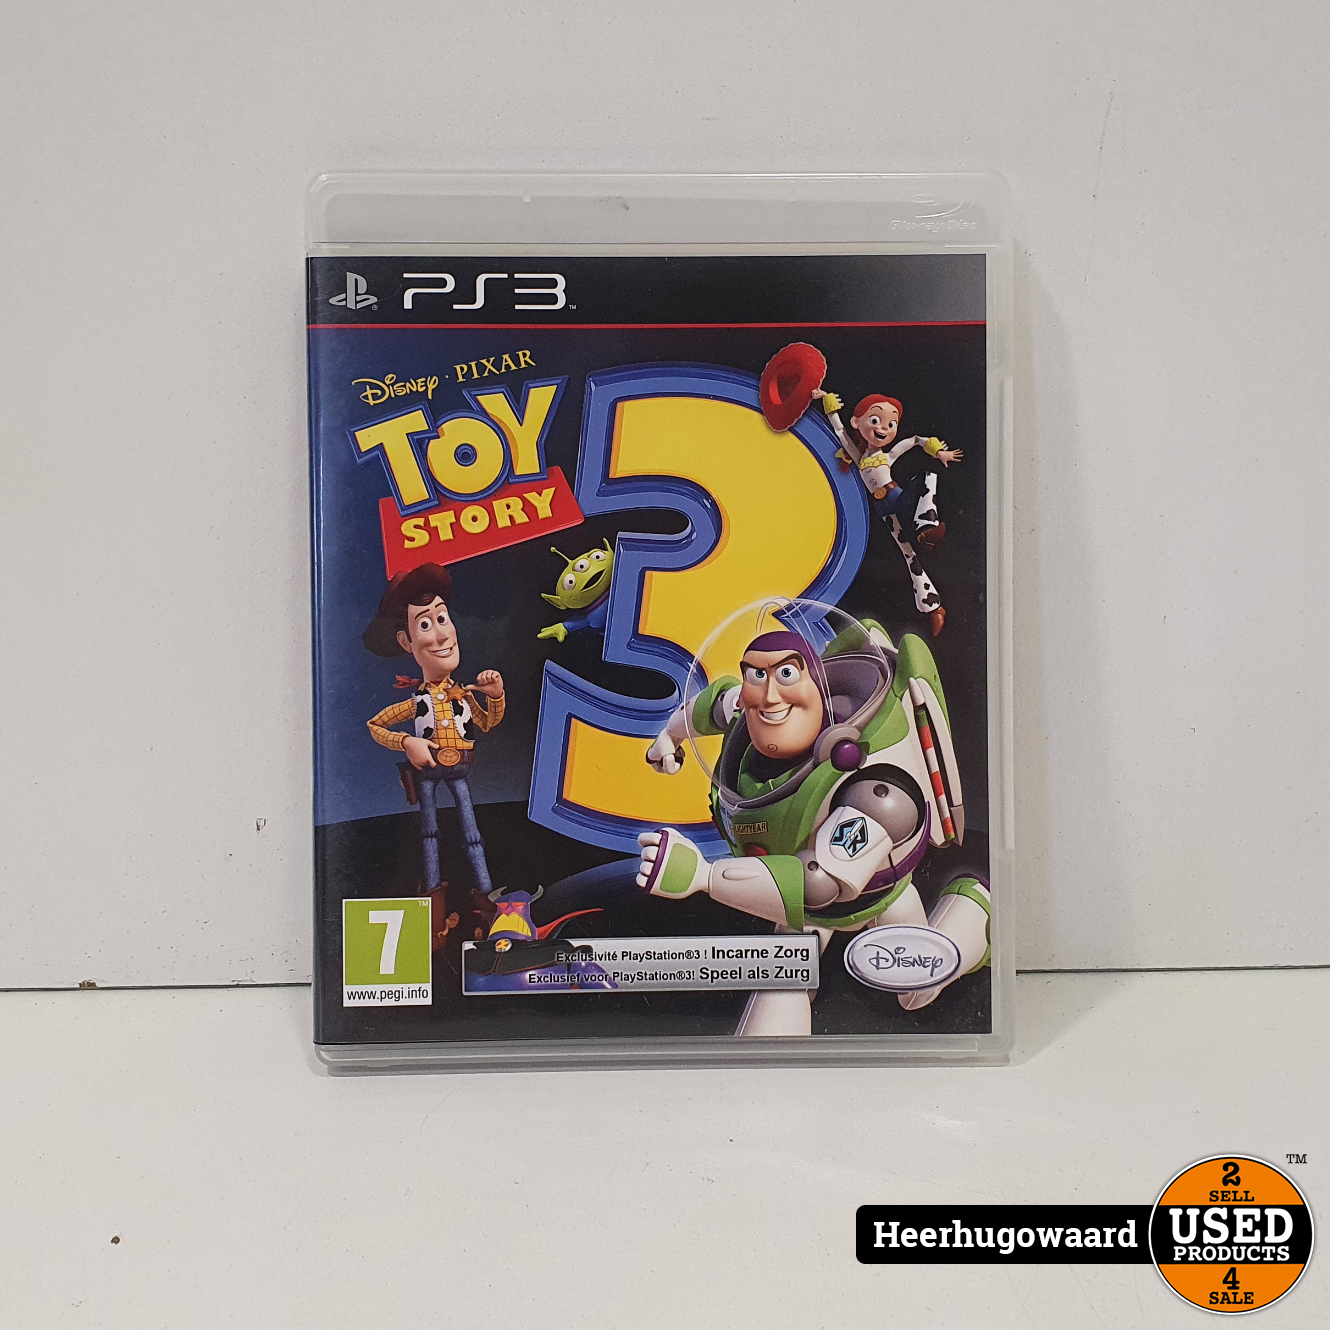 Wet en regelgeving Perforatie stil PS3 Game: Toy Story 3 Compleet in Zeer Nette Staat - Used Products  Heerhugowaard